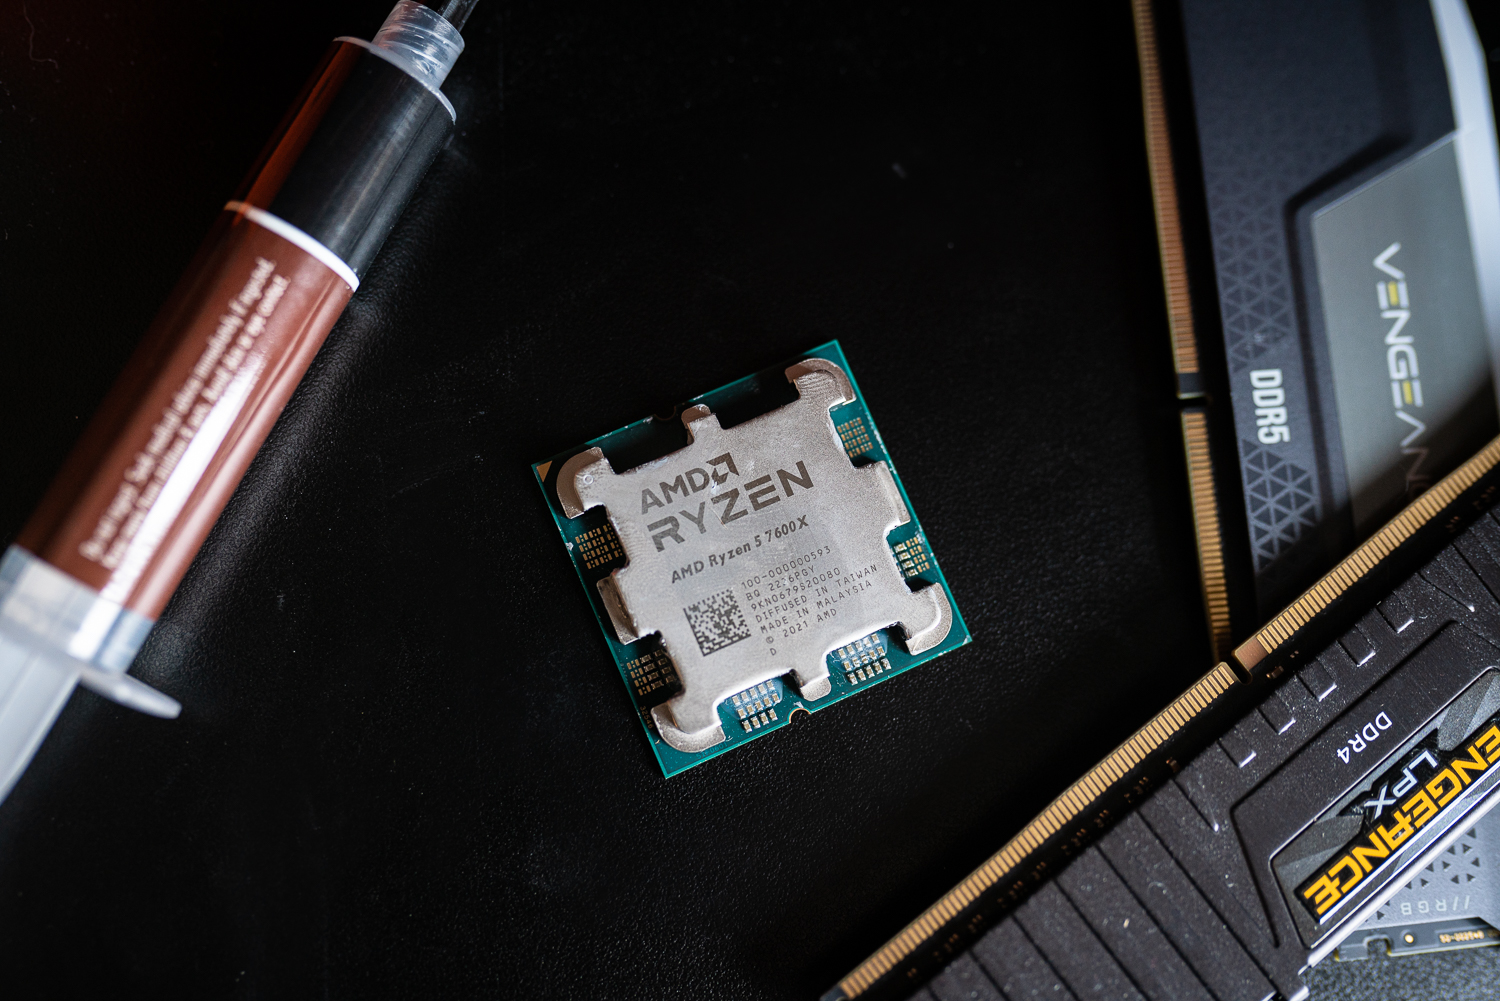 AMD's Latest Game Changer - The Ryzen 5 7500F